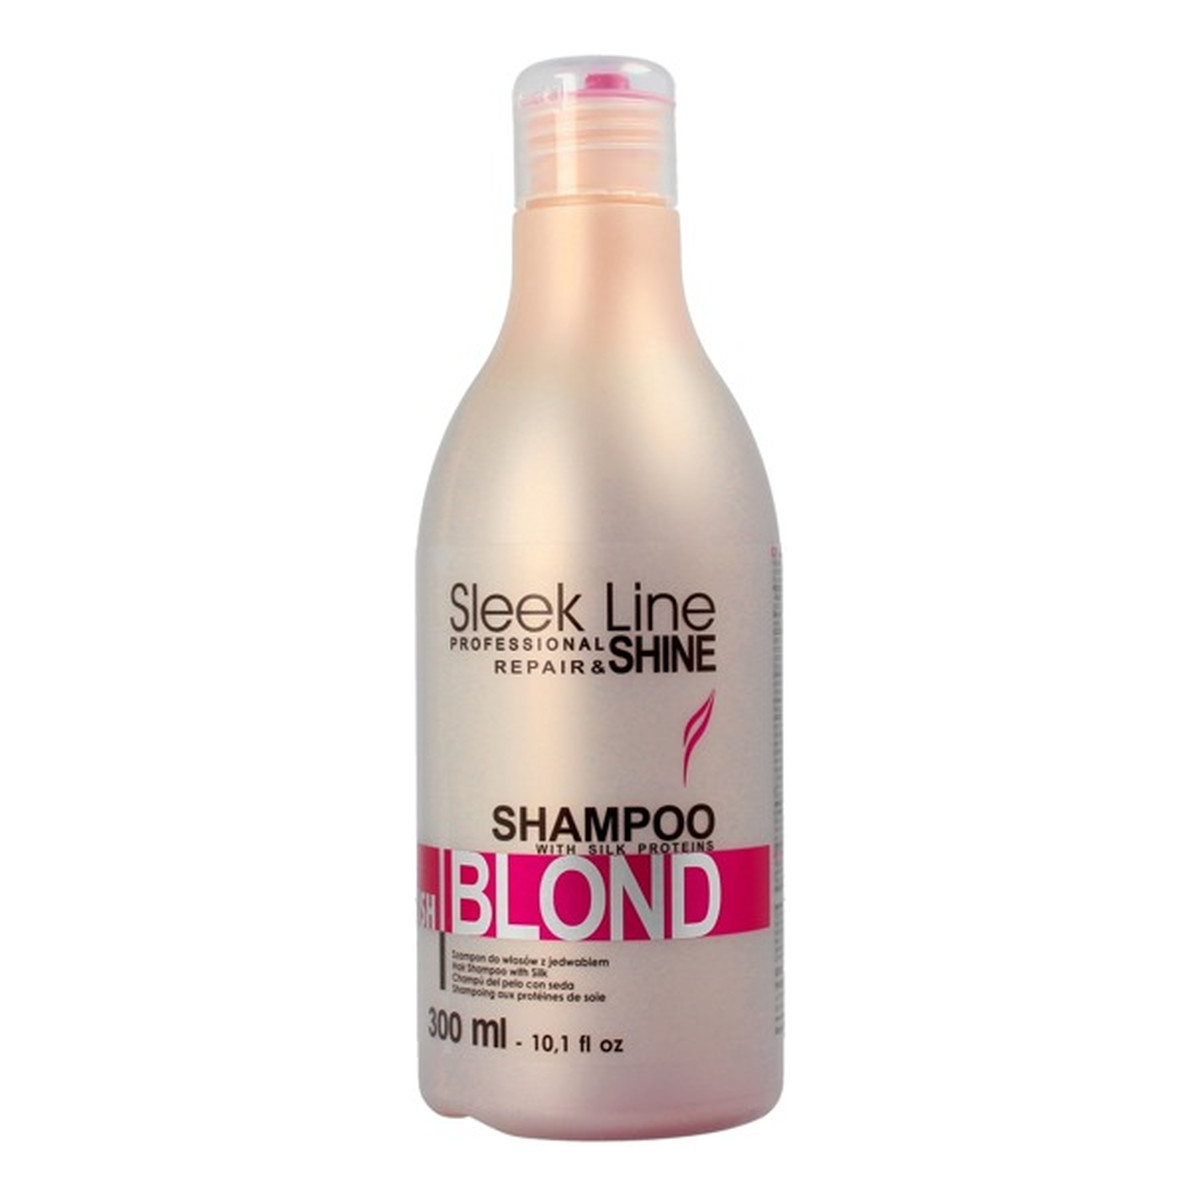 szampon sleek line blond wizaz